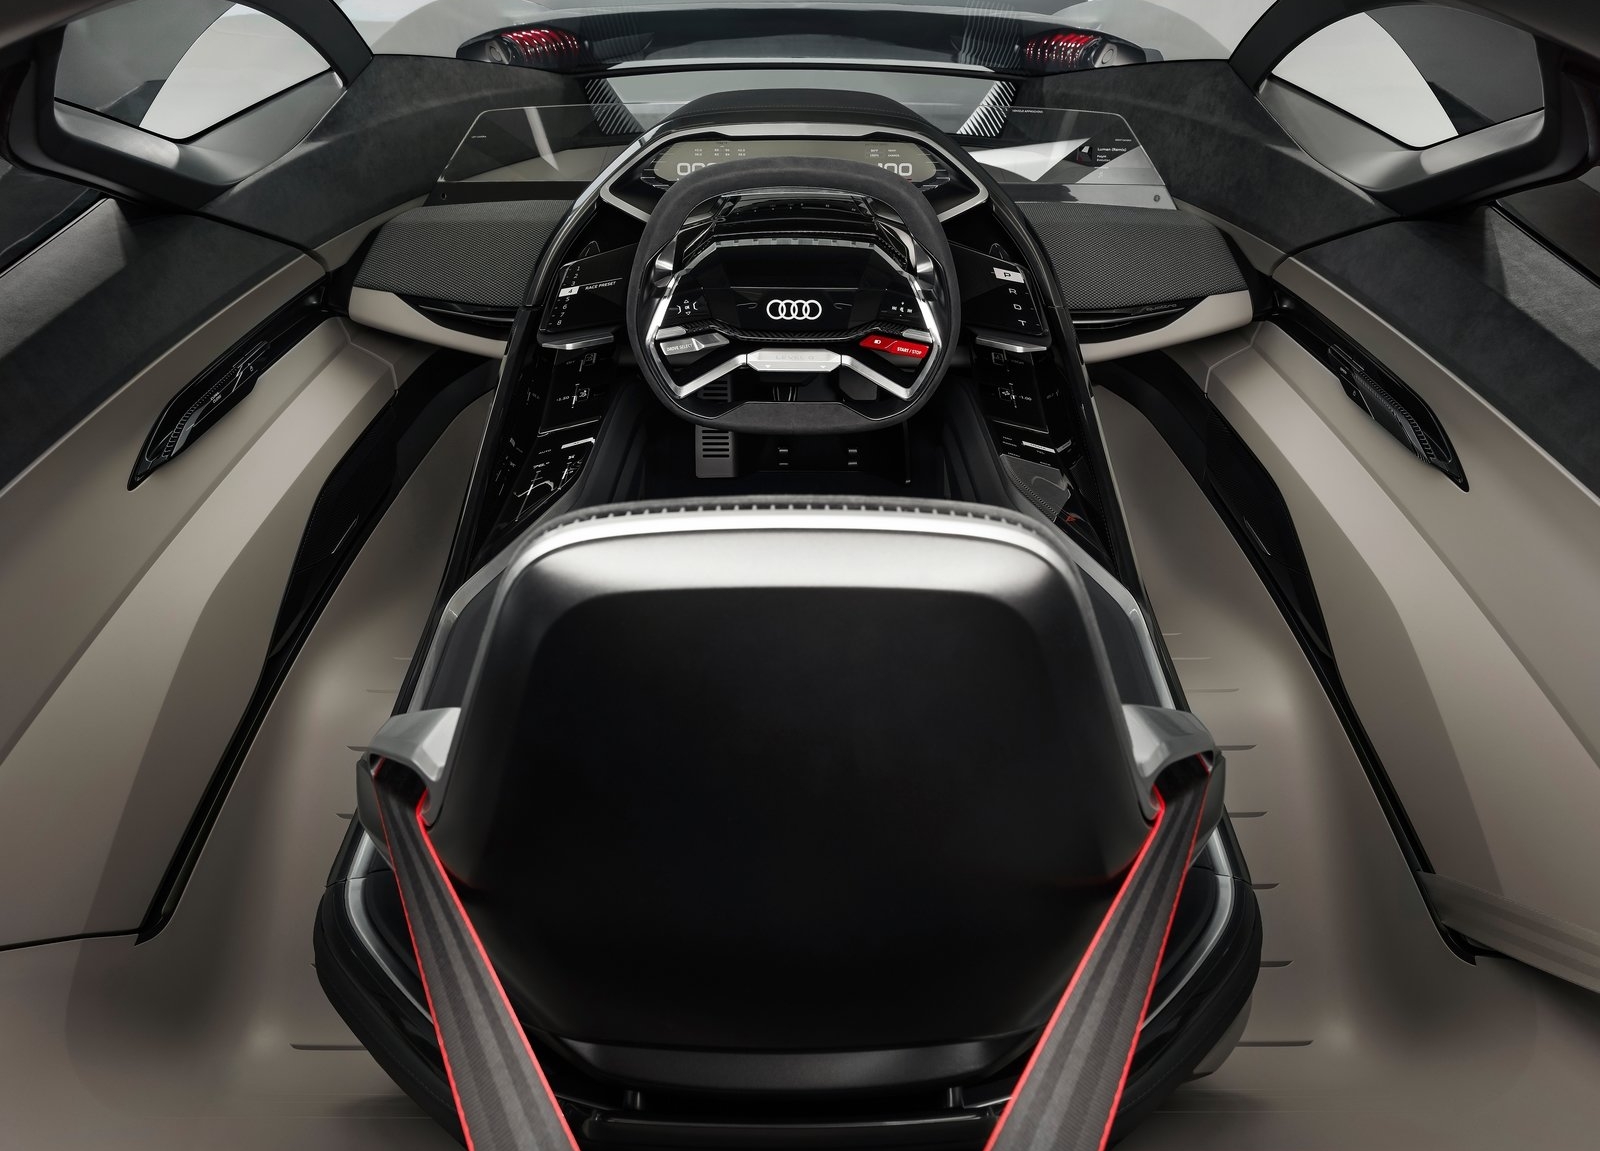 Audi PB18 e-tron Concept (2018)